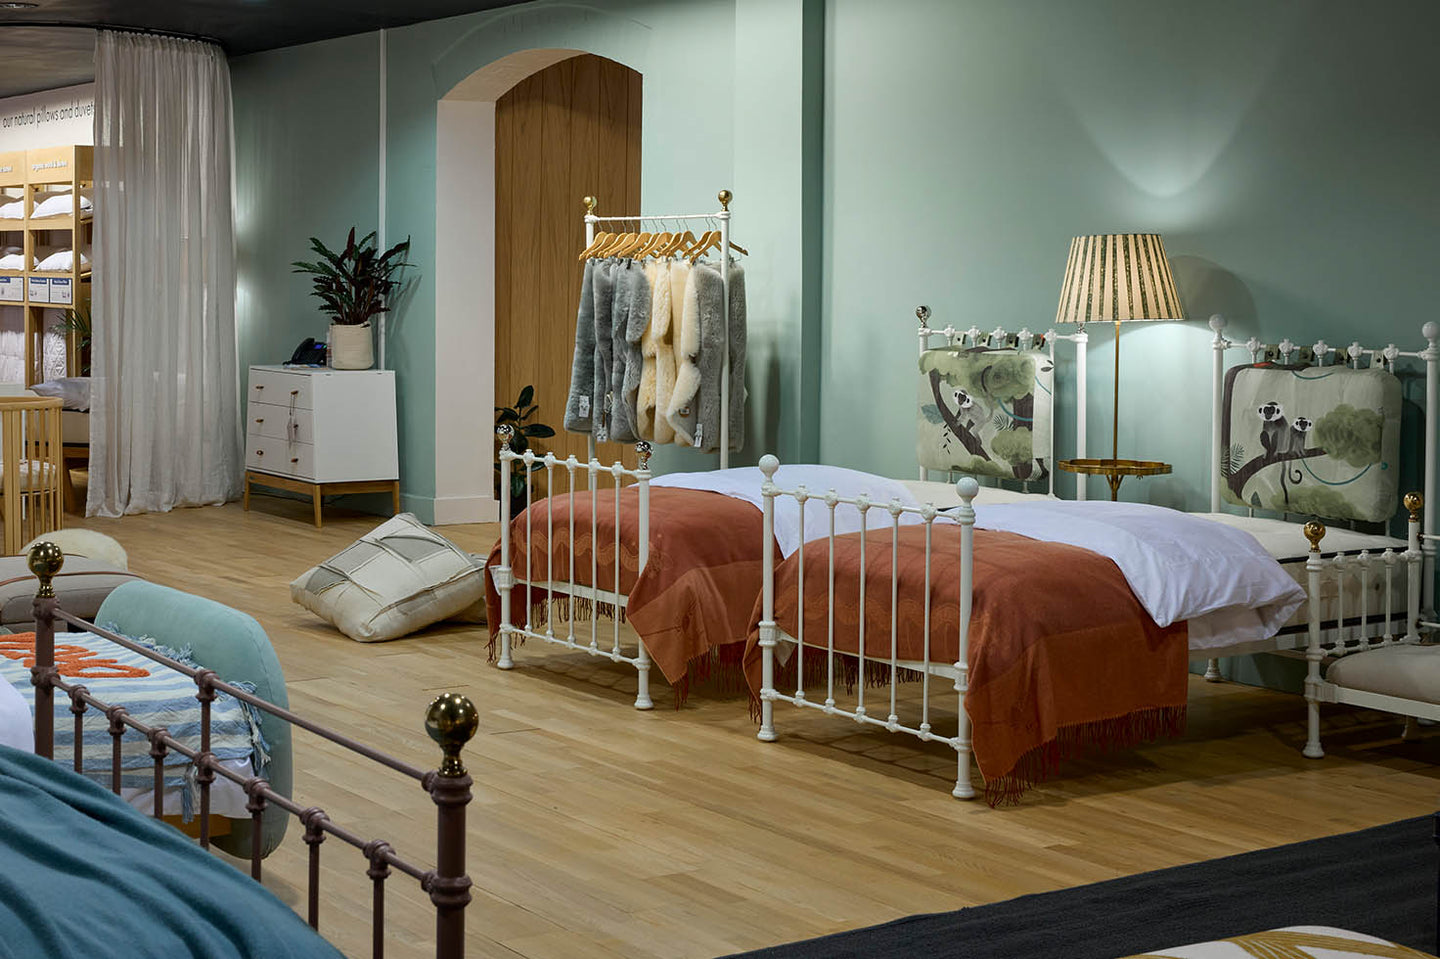 The Cornish Bed Company - Knutsford Showroom